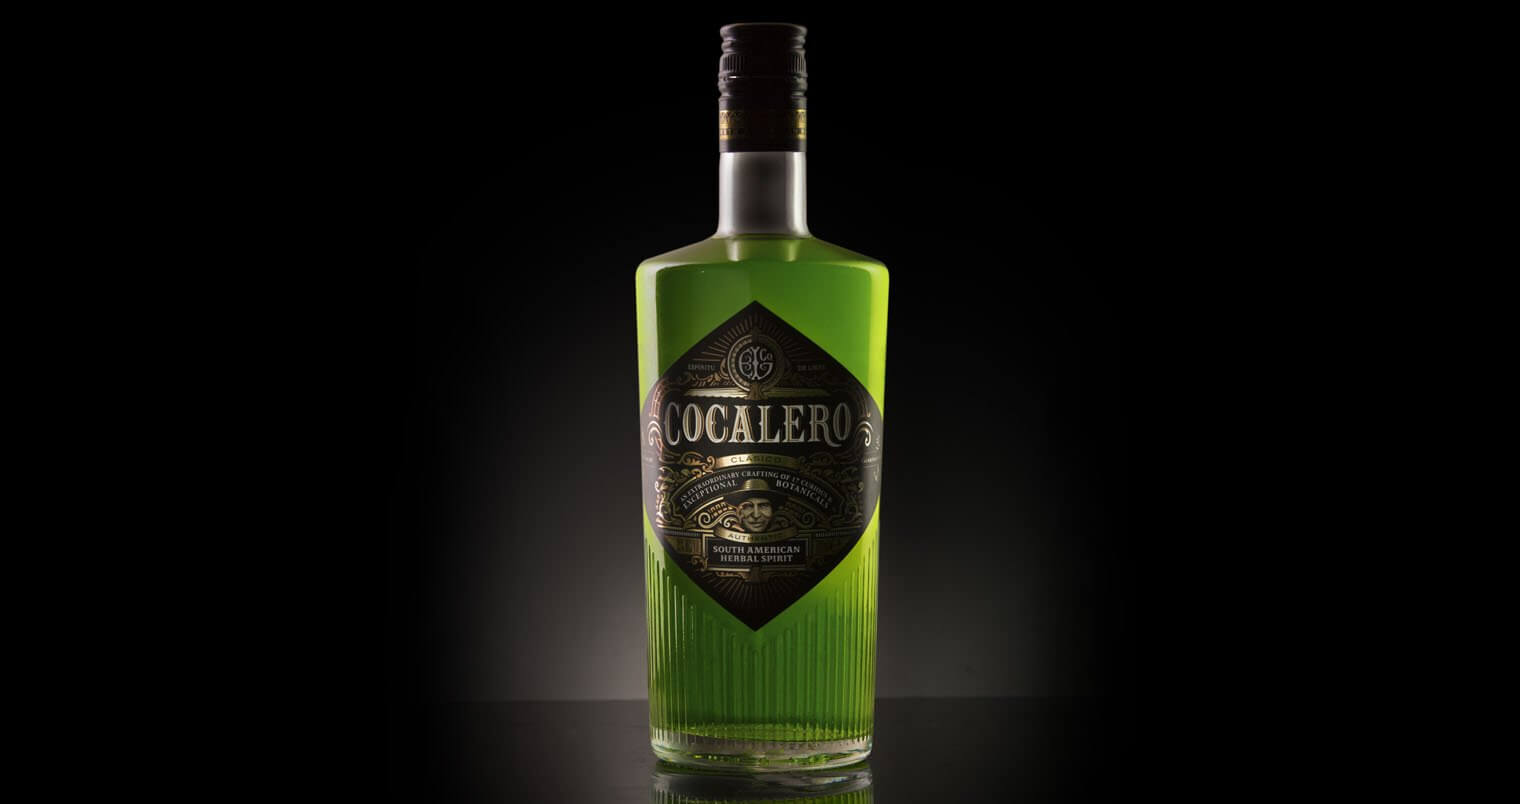 Cocalero Clásico, bottle on dark shadow, featured image